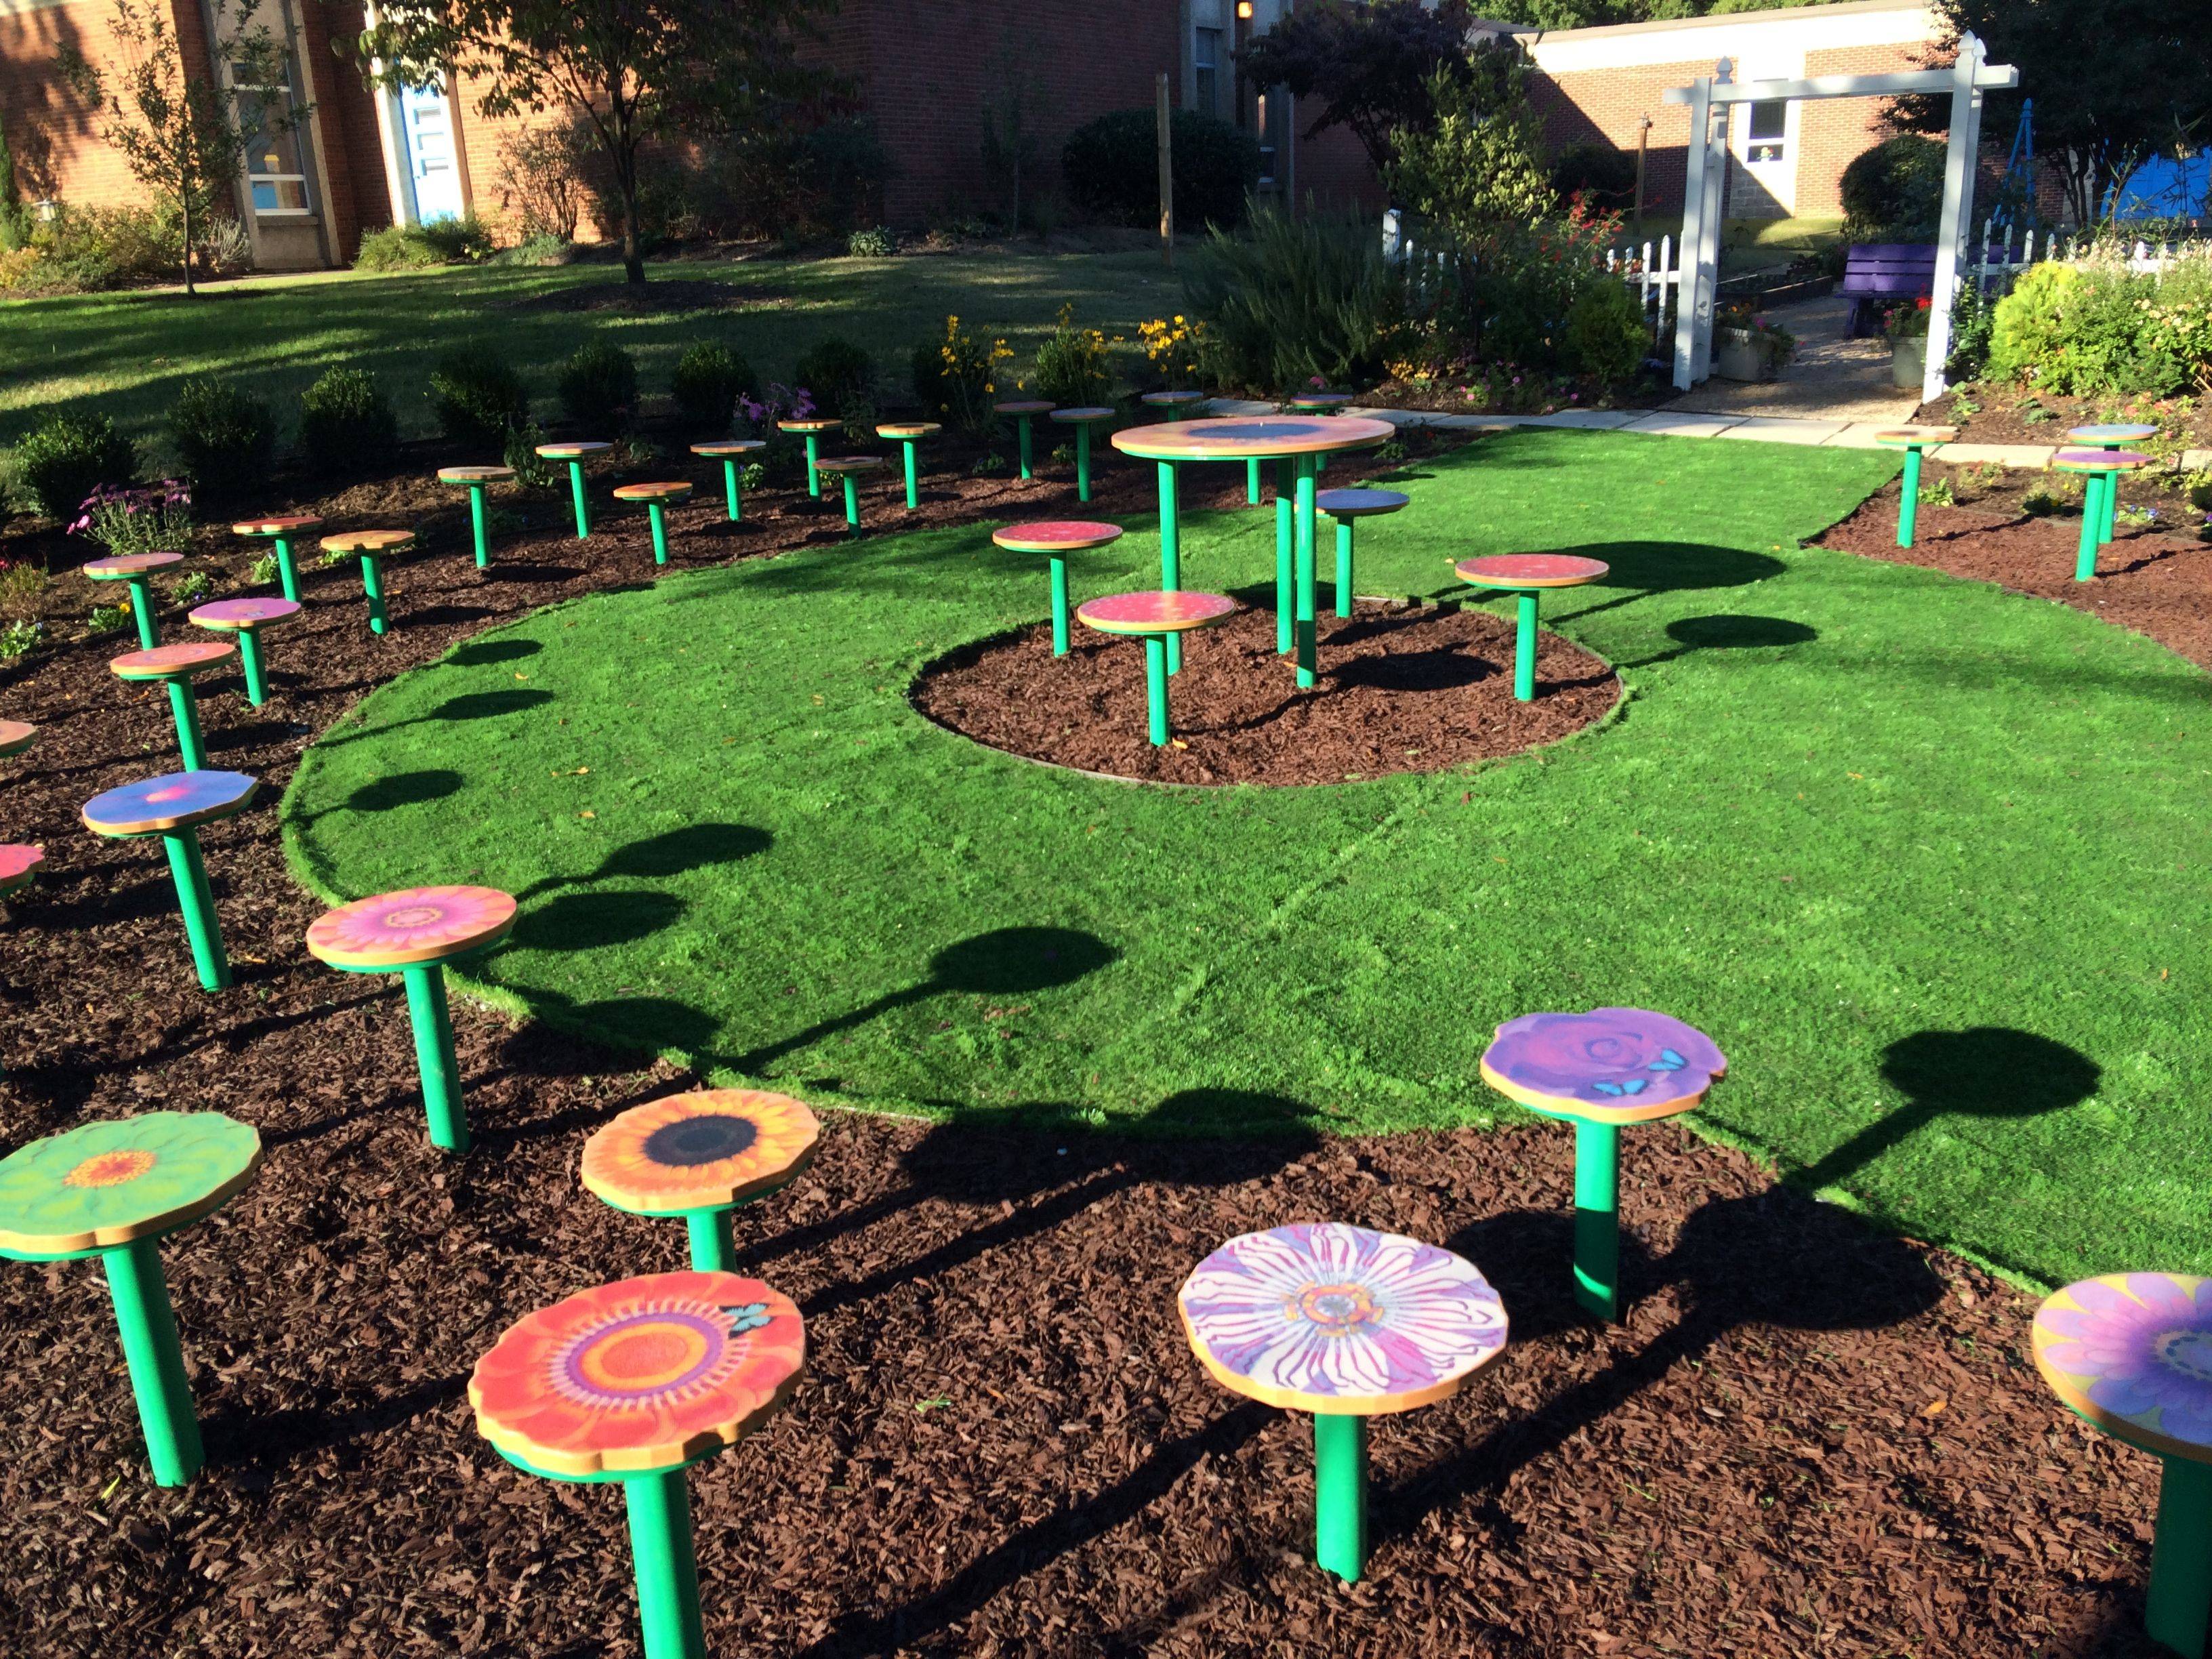 Whole Kids Foundation School Gardens Shown To Help Kids Make